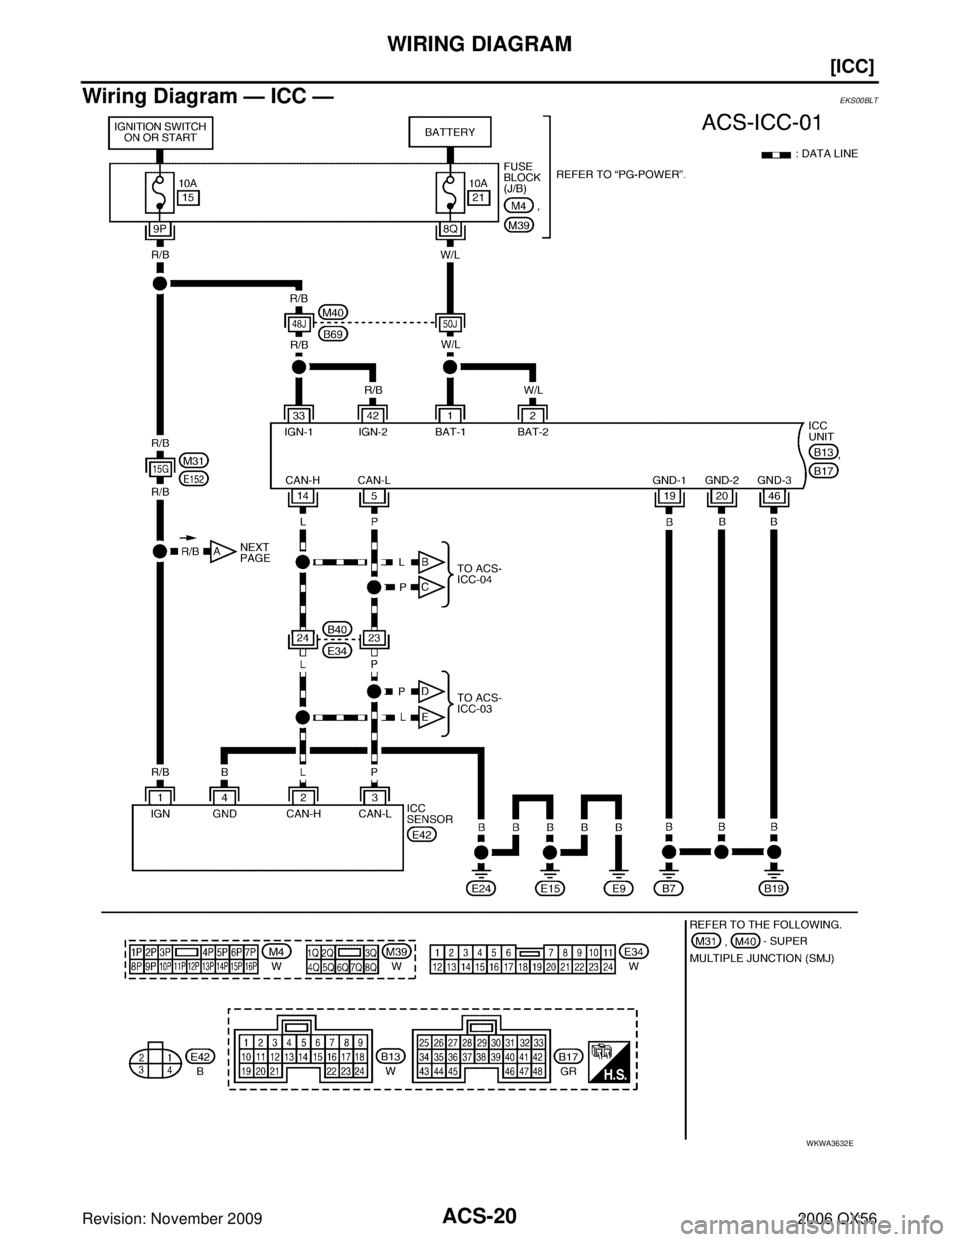 INFINITI QX56 2006  Factory Service Manual ACS-20
[ICC]
WIRING DIAGRAM
Revision: November 20092006 QX56
Wiring Diagram — ICC —EKS00BLT
WKWA3632E 